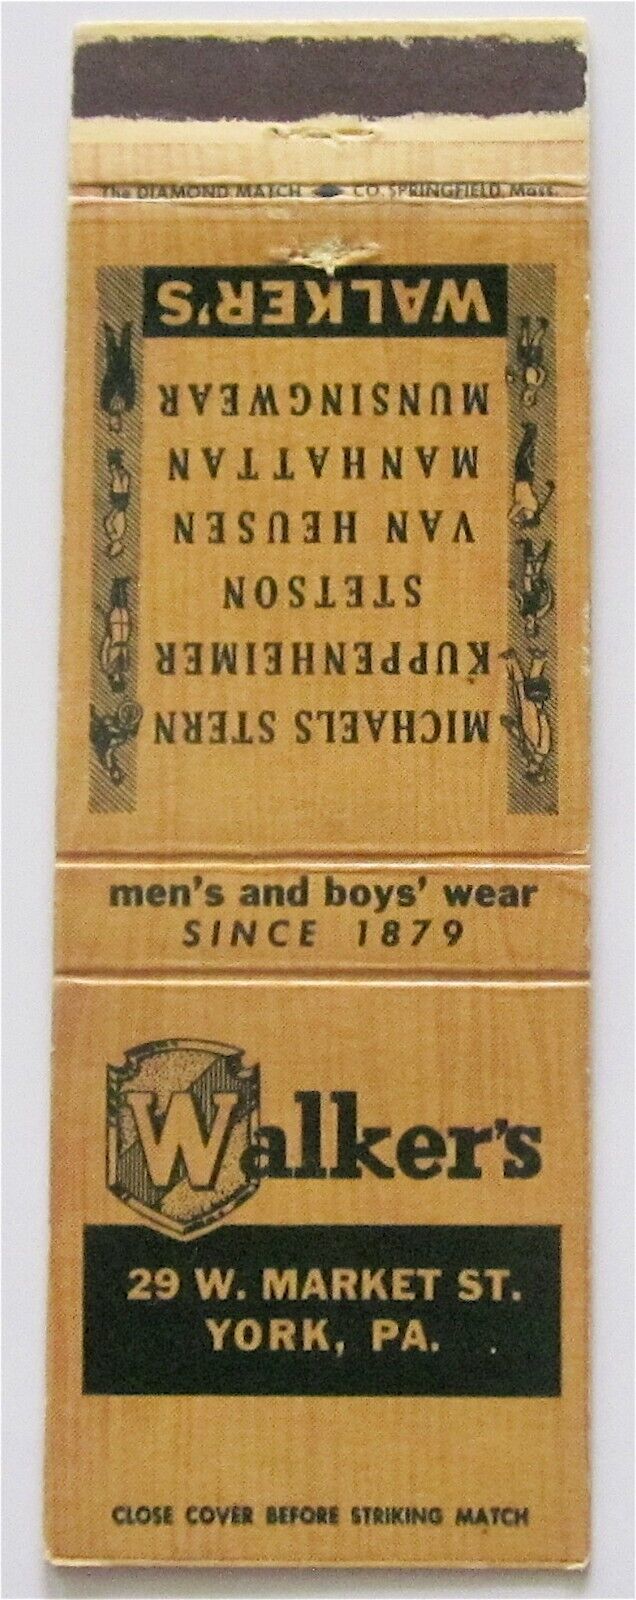 WALKER\'S MEN\'S AND BOYS\' WEAR SINCE 1879, YORK, PA VINTAGE MATCHBOOK COVER